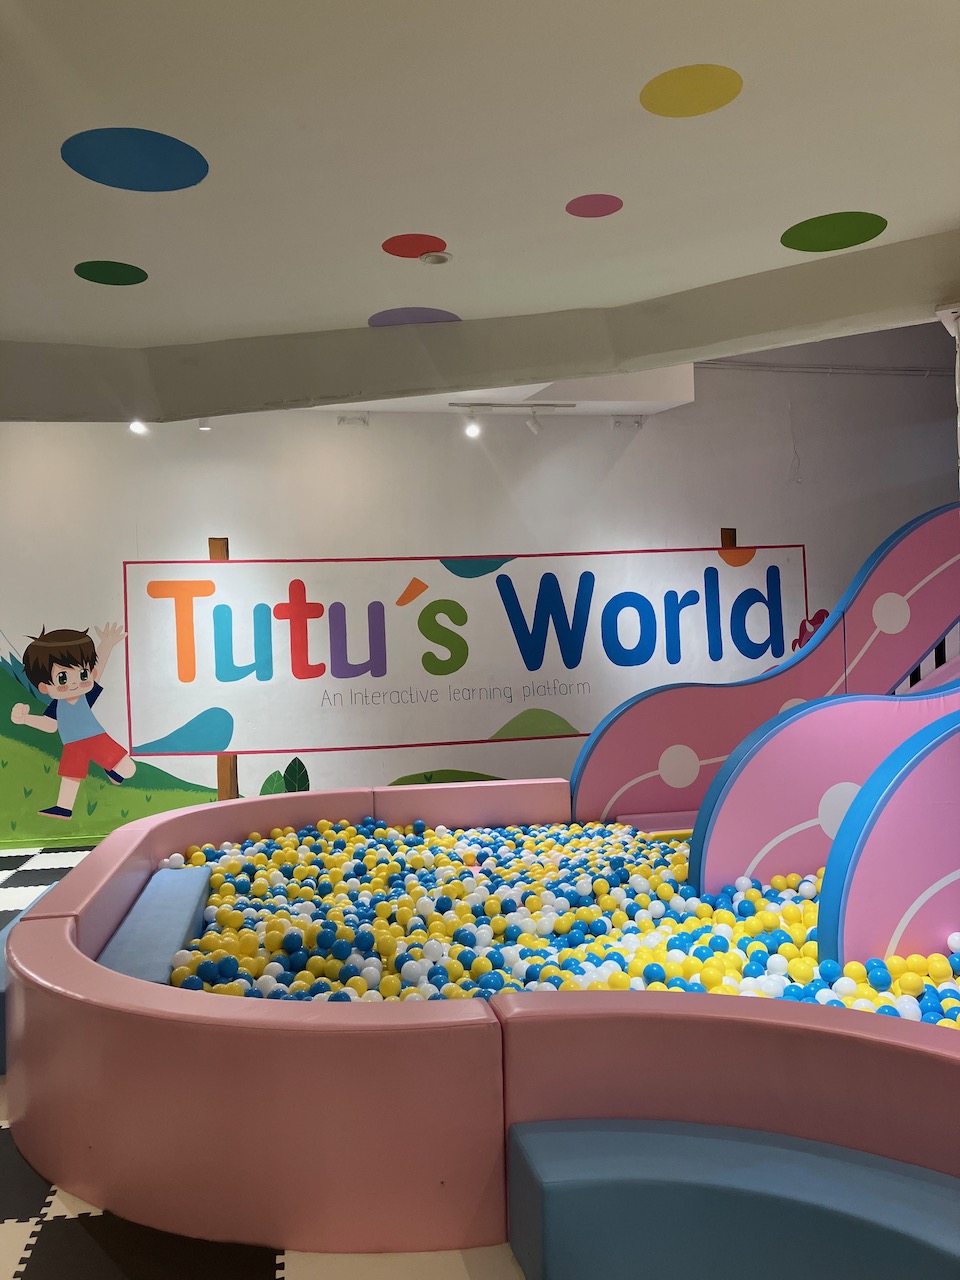 Tutu’s World at Labim Mall -  Photo by Yentra.com